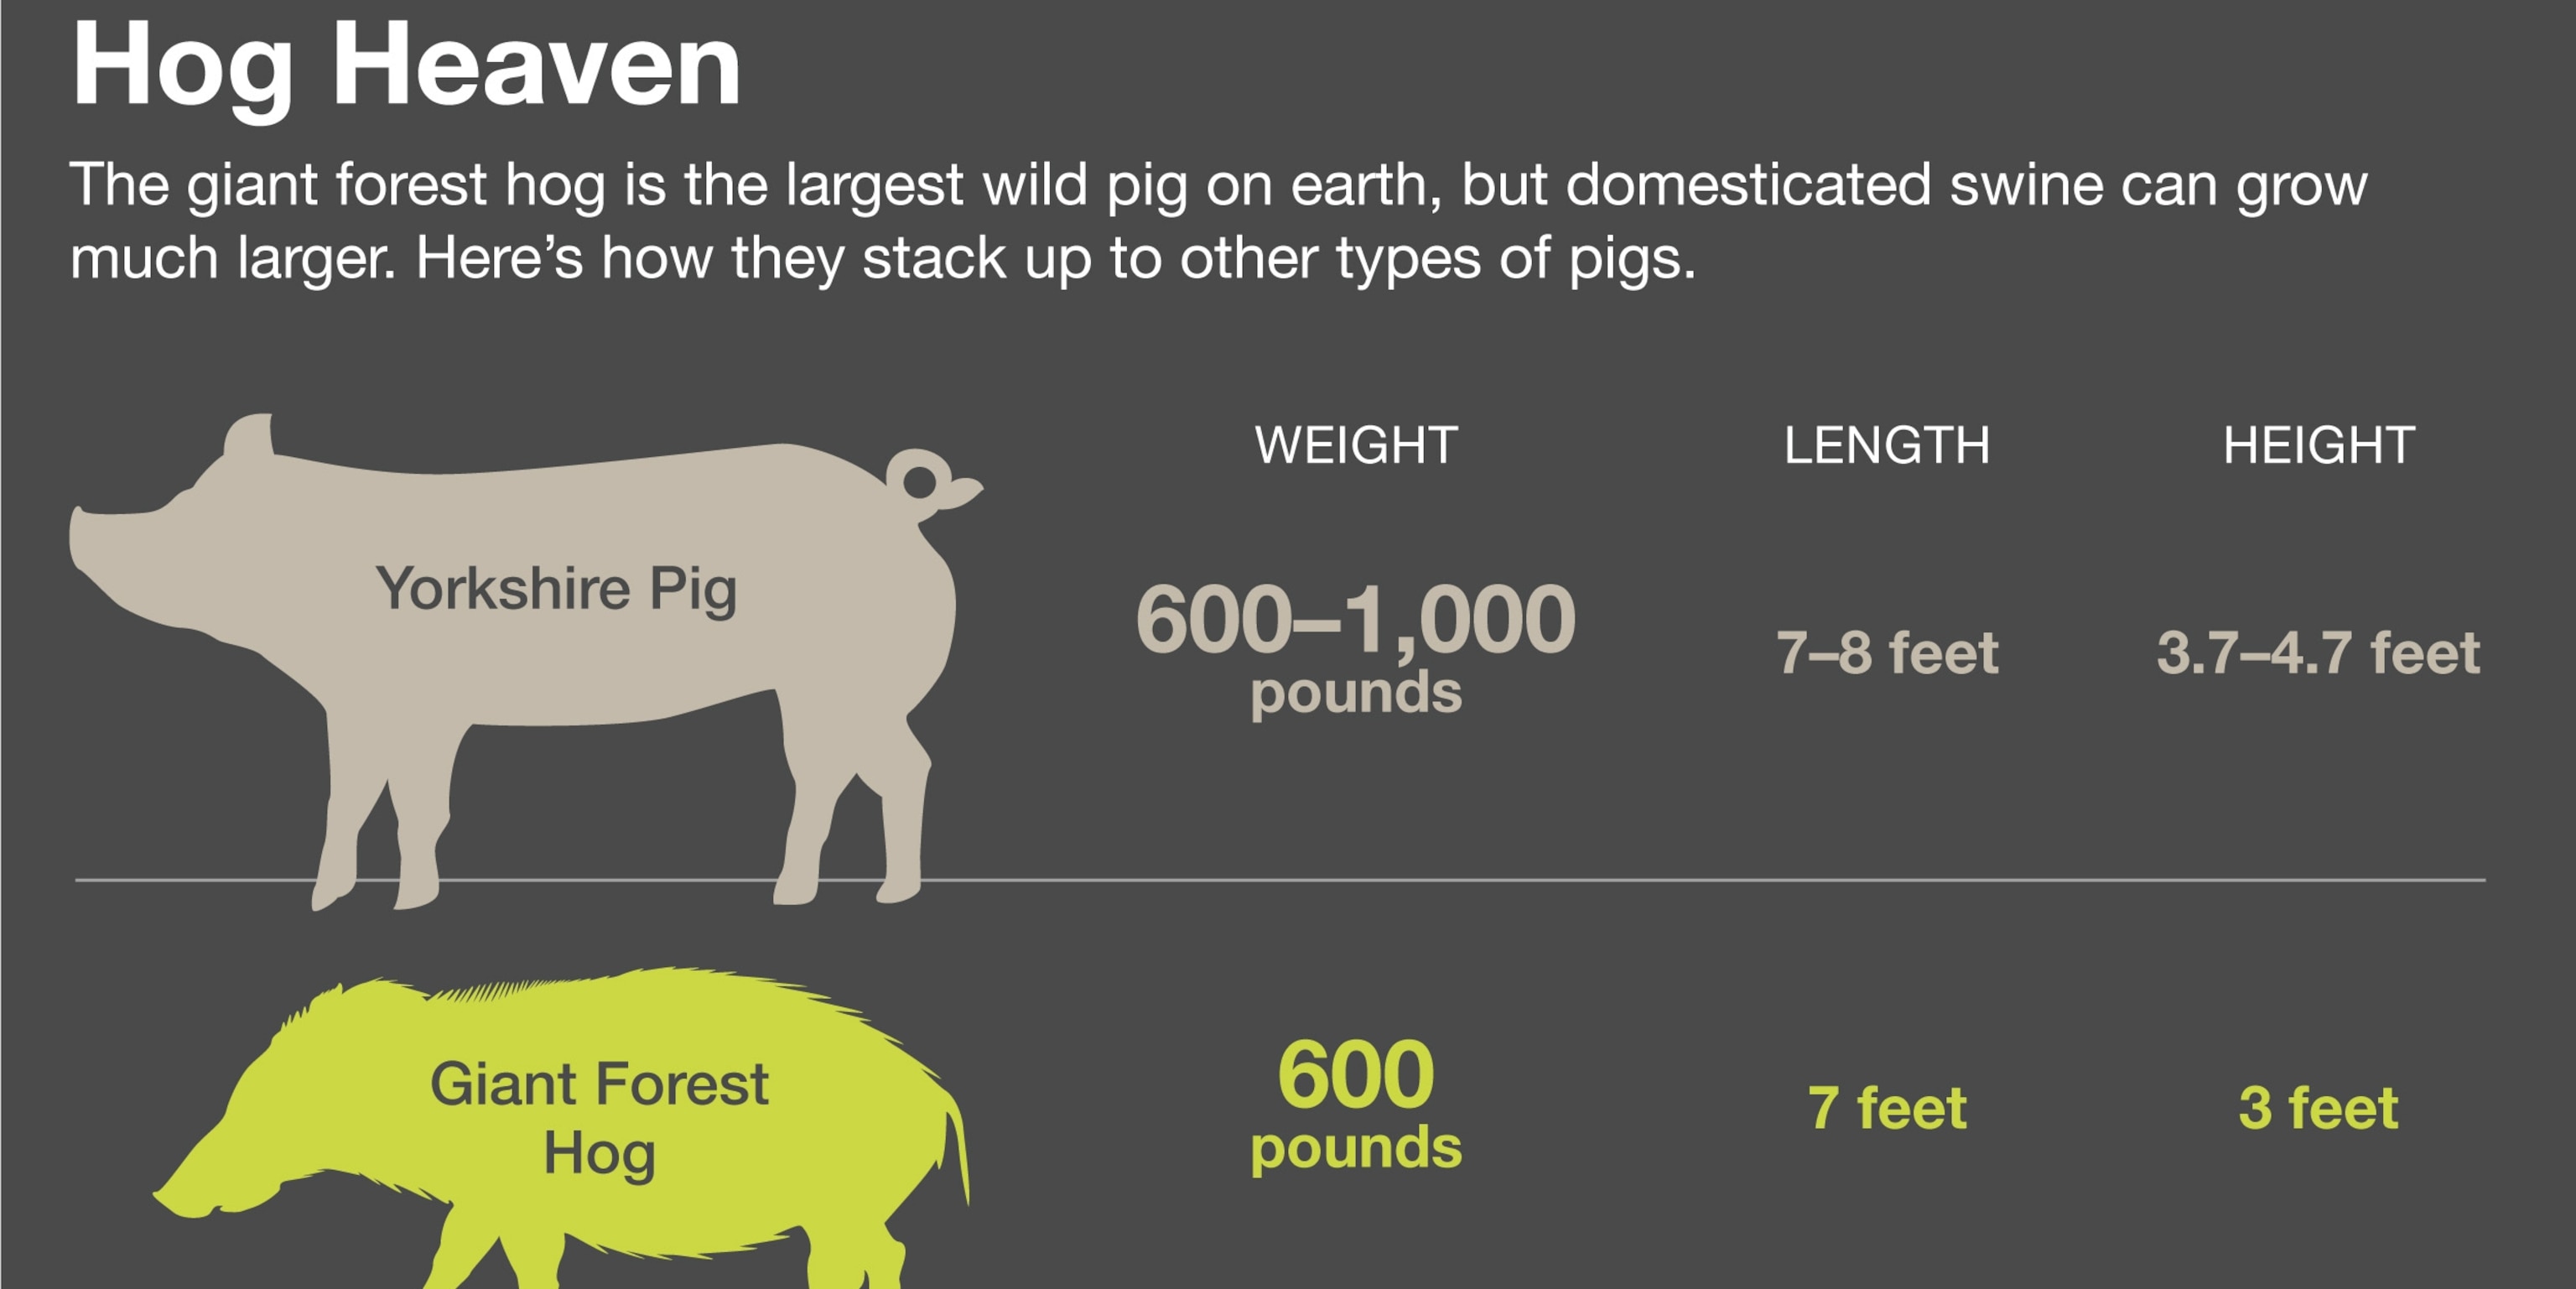 How long is a big pig?